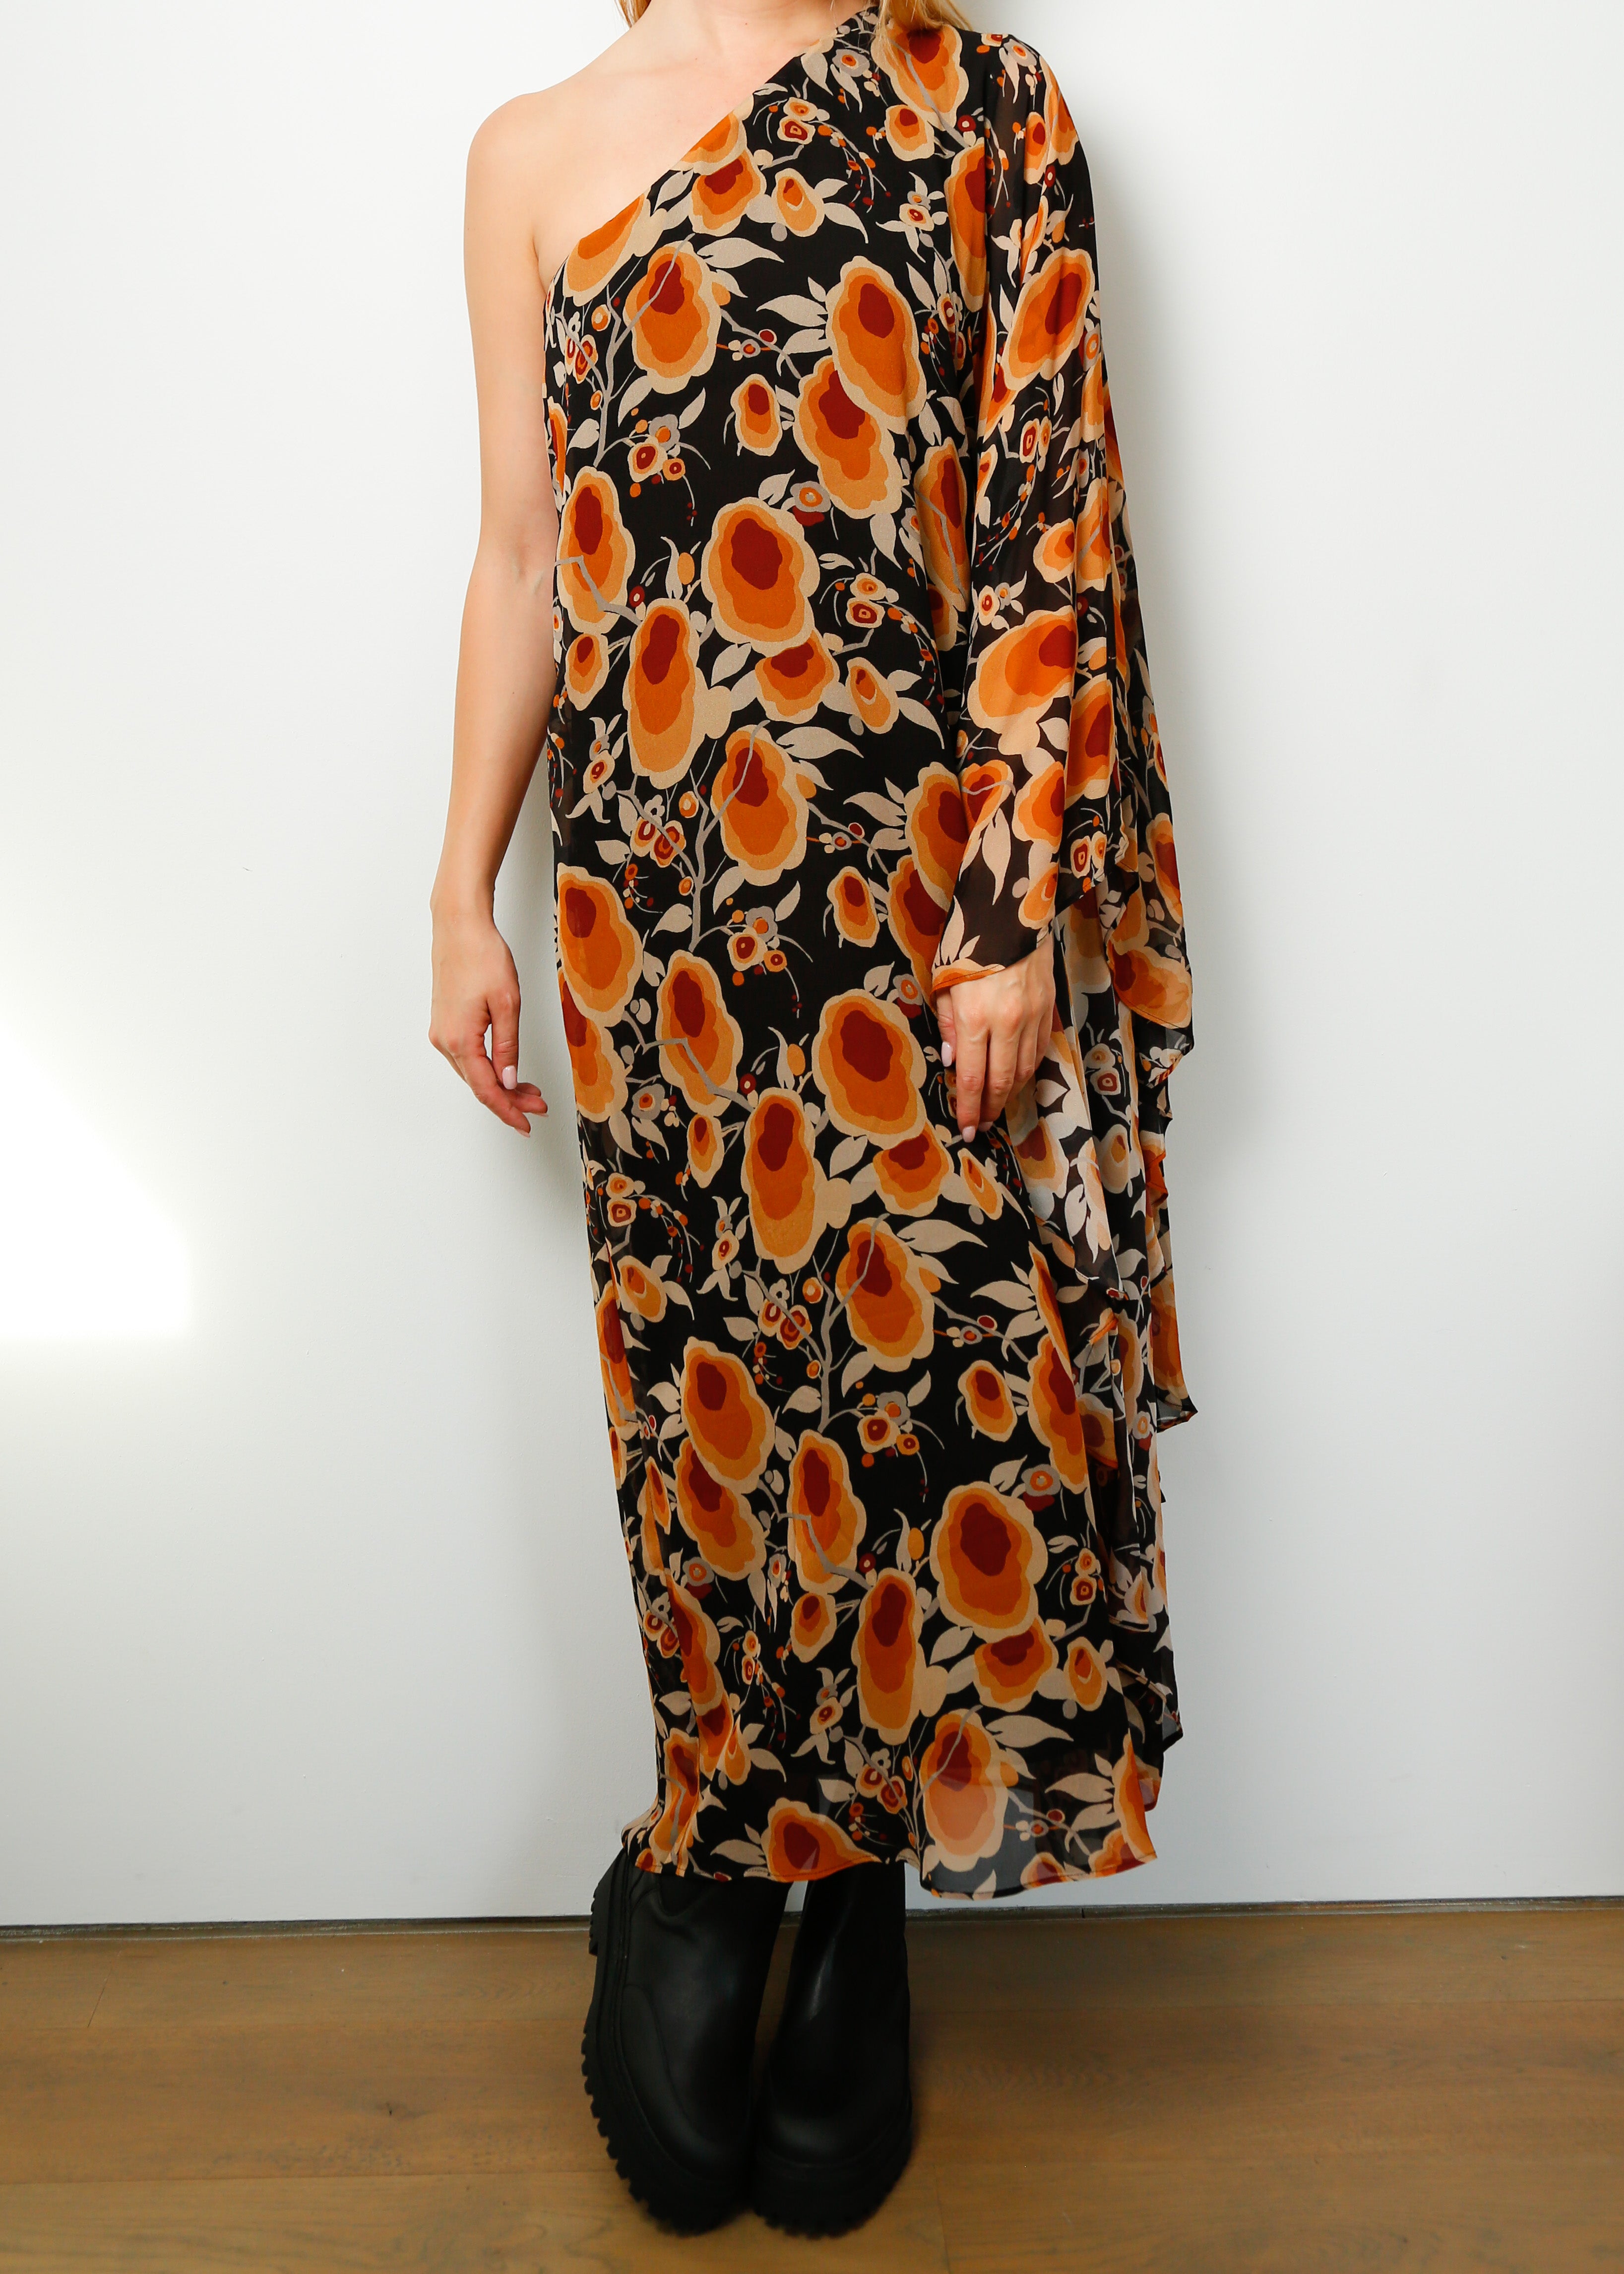 RIXO Liza Dress in Sienna Starlet Floral